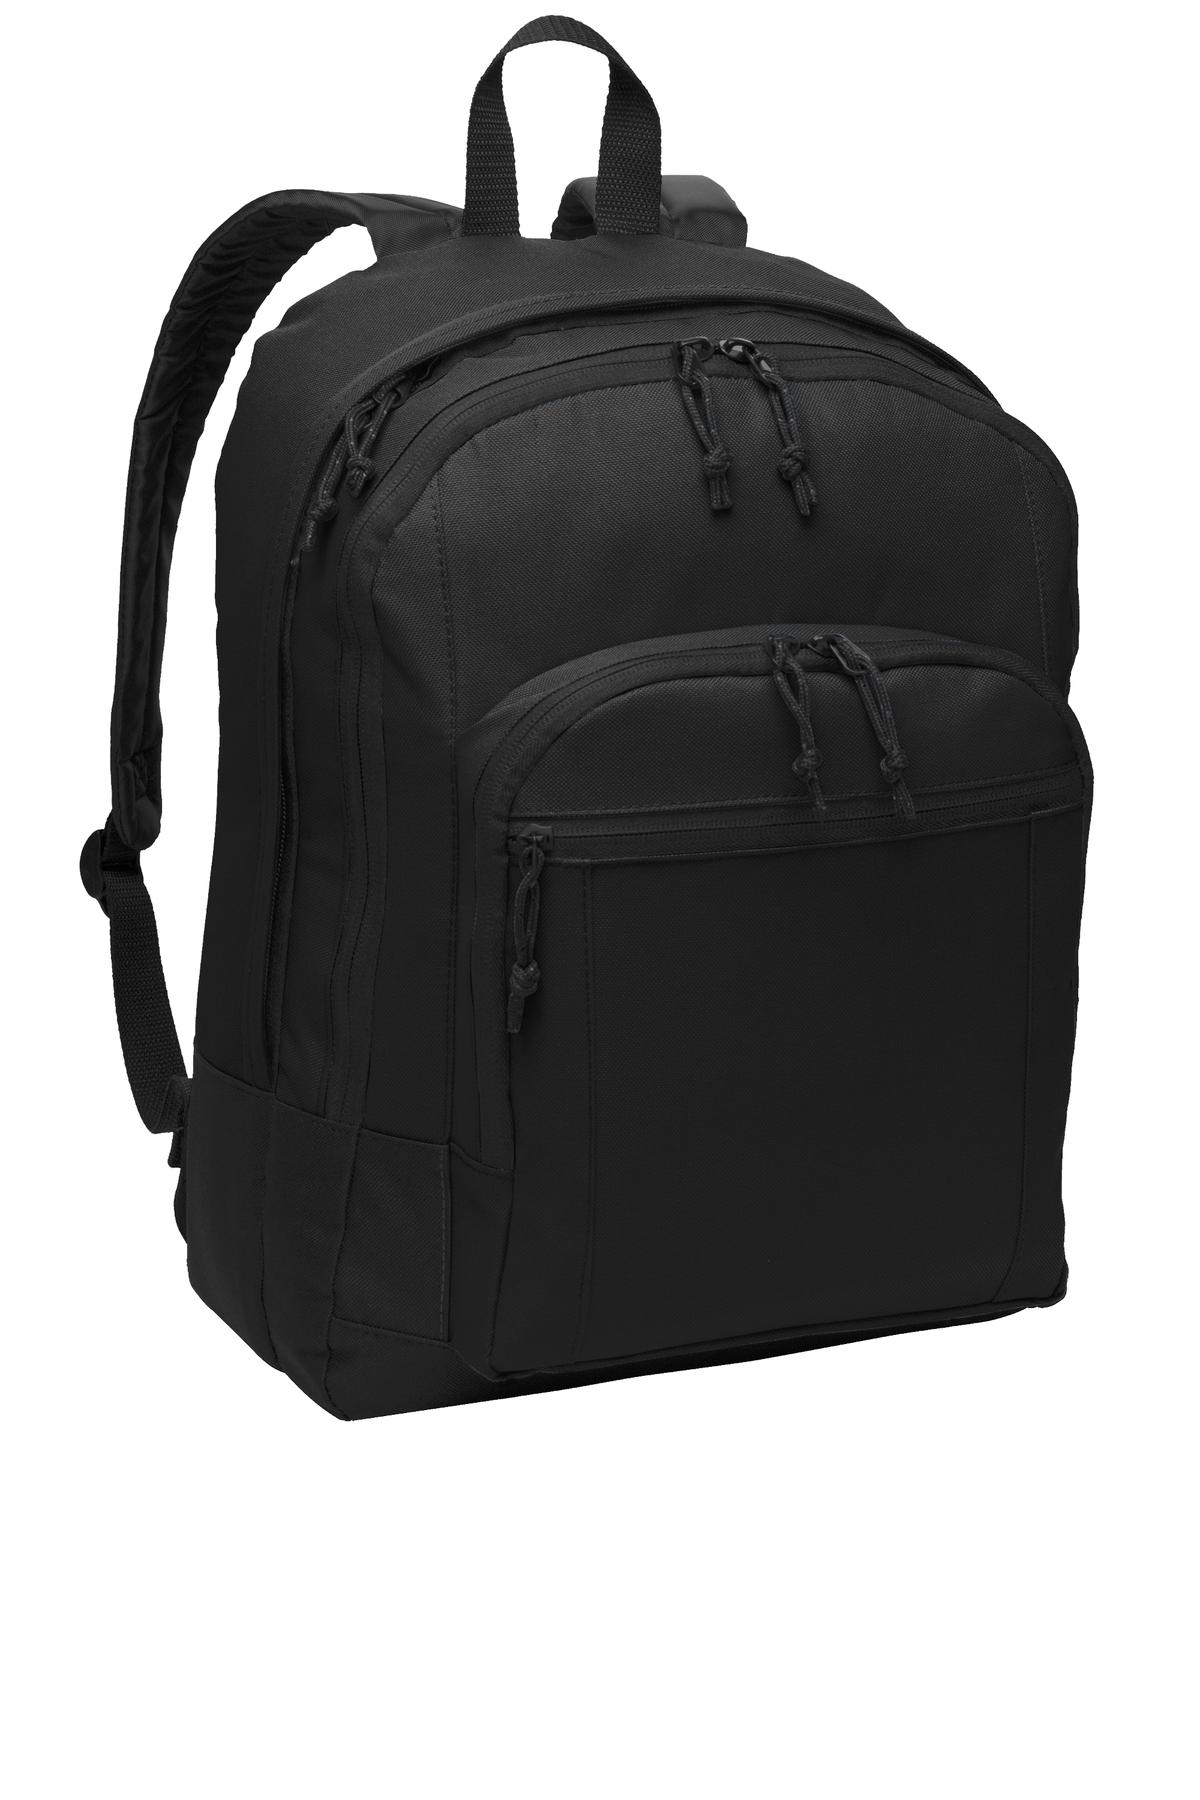 Port Authority Hospitality Bags ® Basic Backpack.-Port Authority